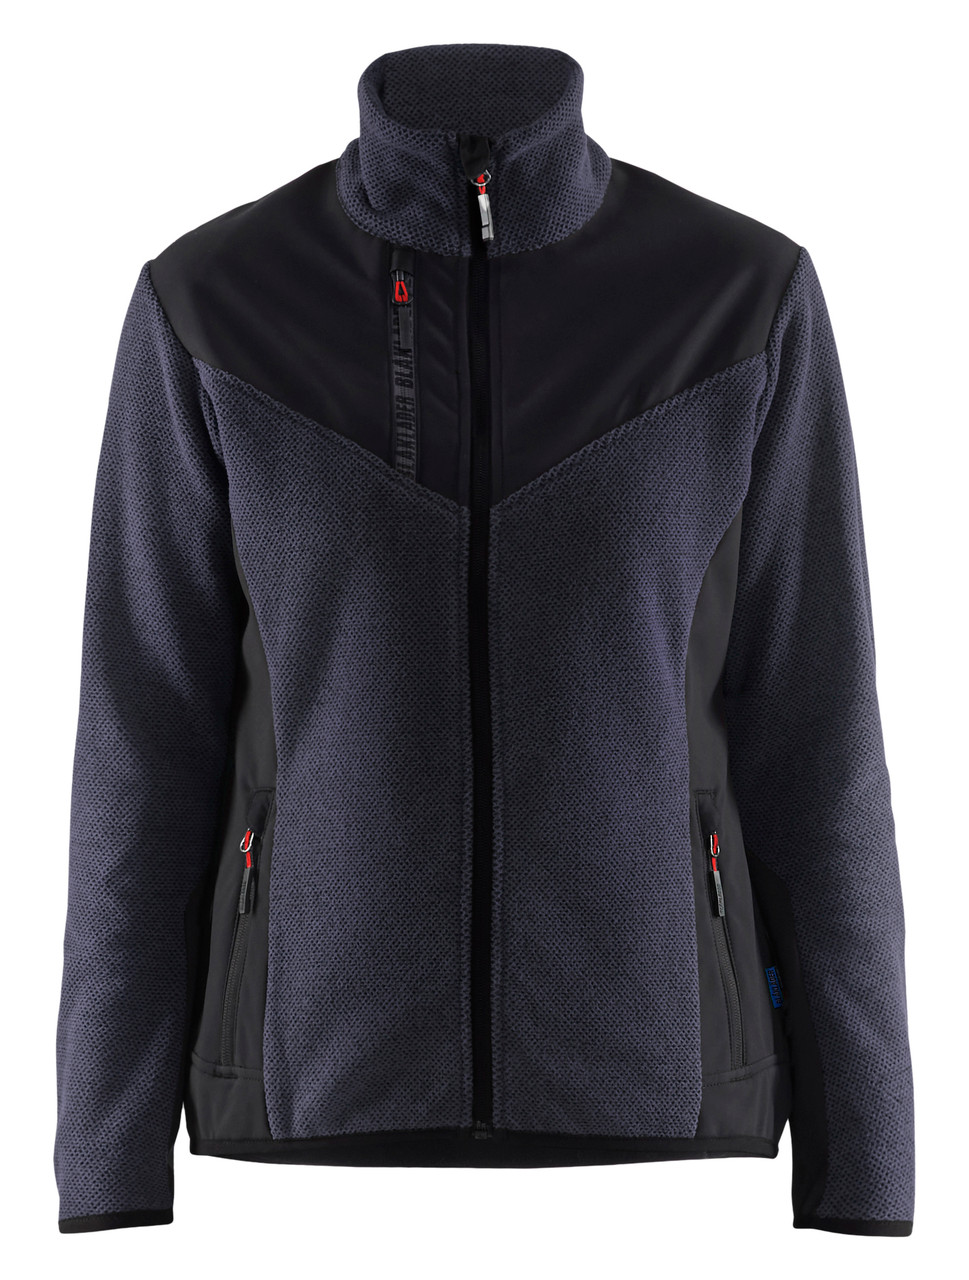 BLAKLADER Jacket | 5943 Womens Dark Navy Blue /Black Jacket Knitted with Full Zip in Polyester Fleece